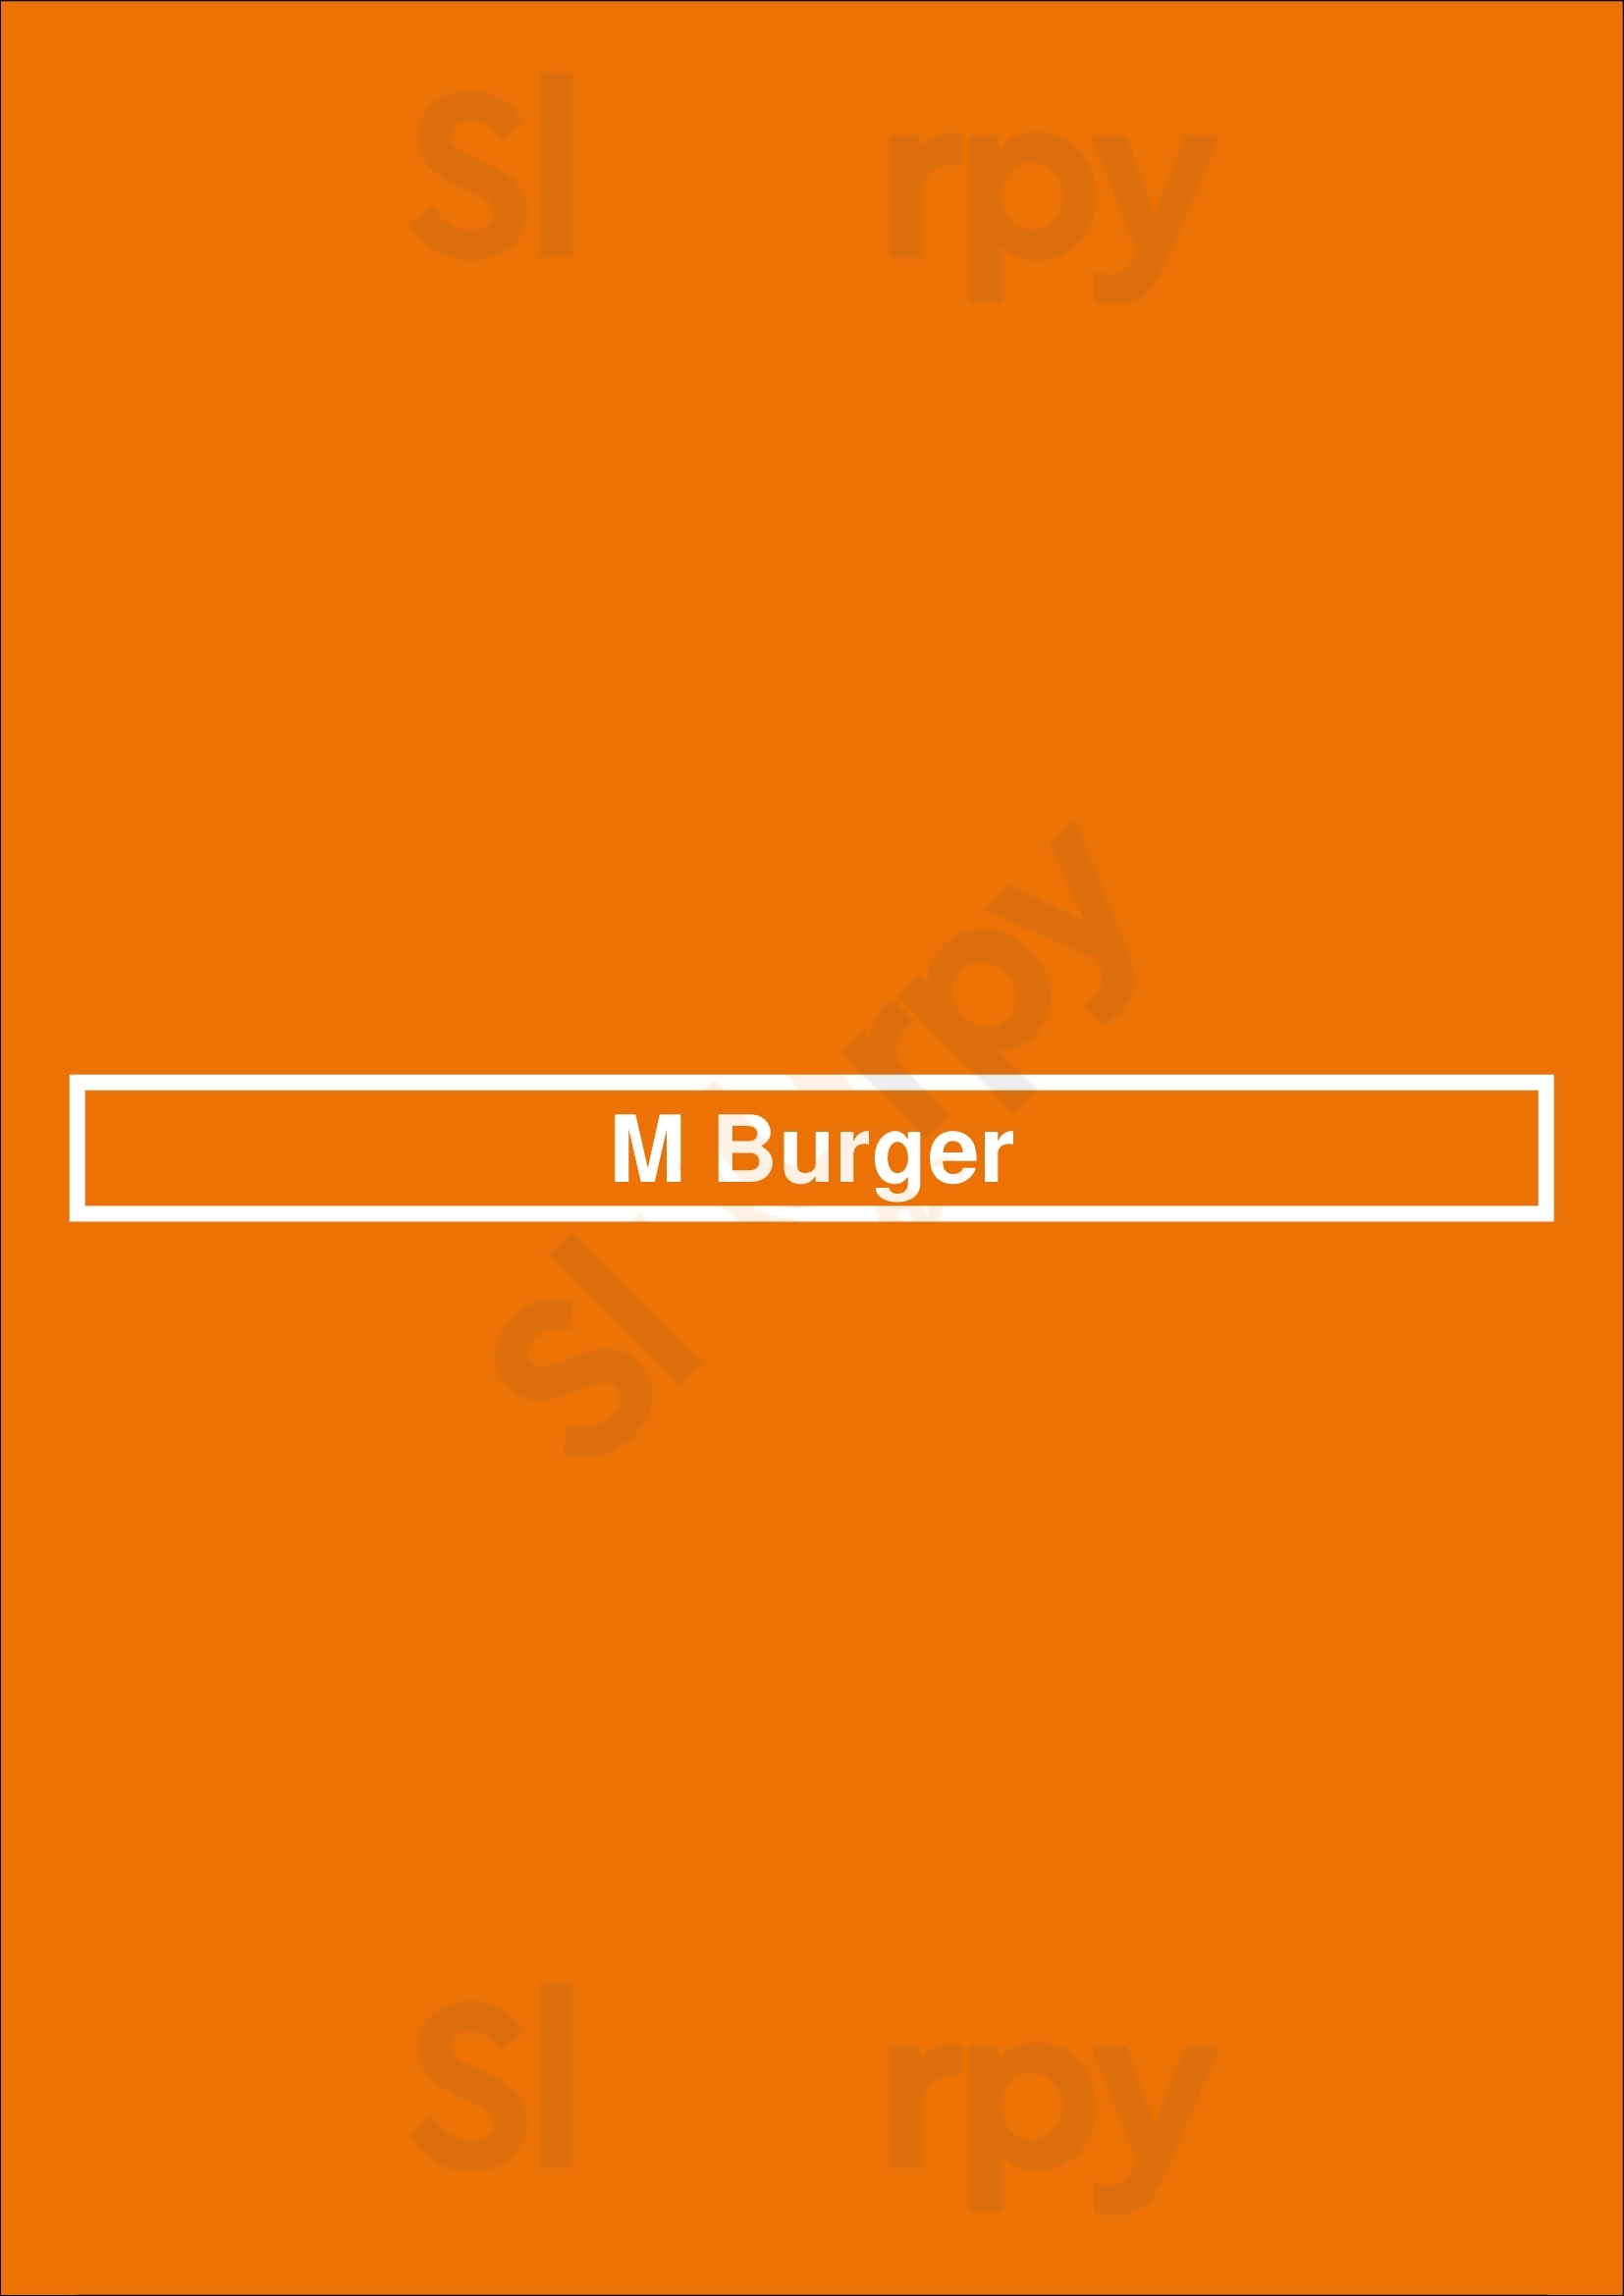 M Burger Chicago Menu - 1